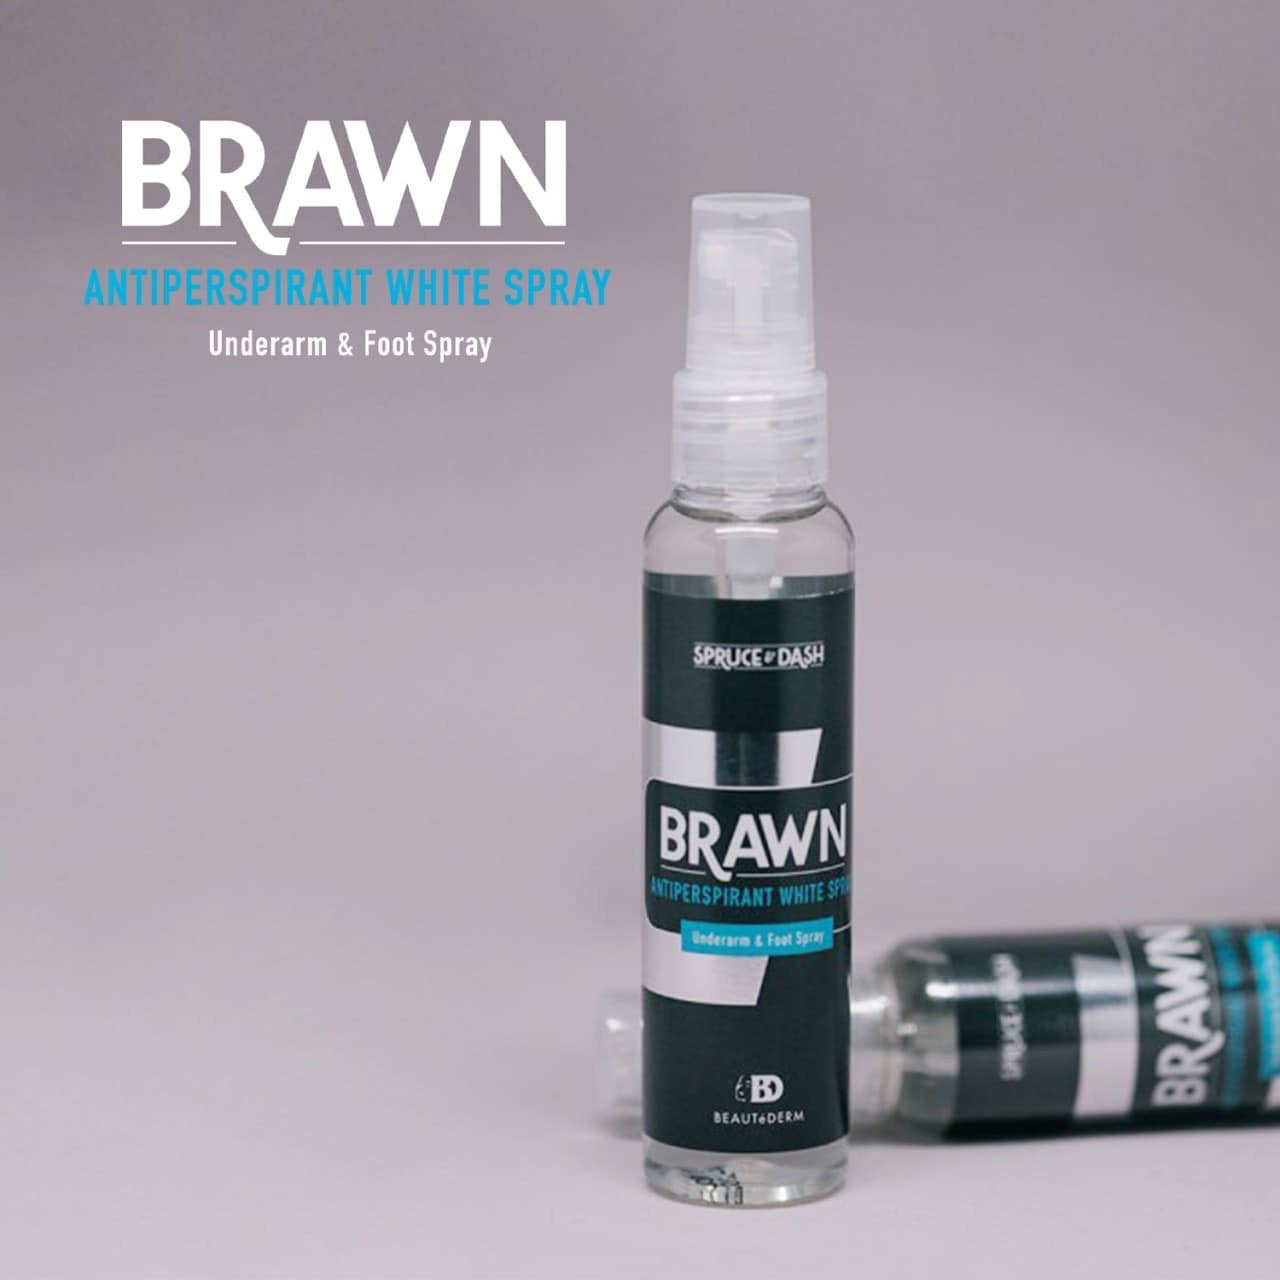 Brawn Antiperspirant Underarm and Foot spray $5(65 ml) or $10(150 ml)